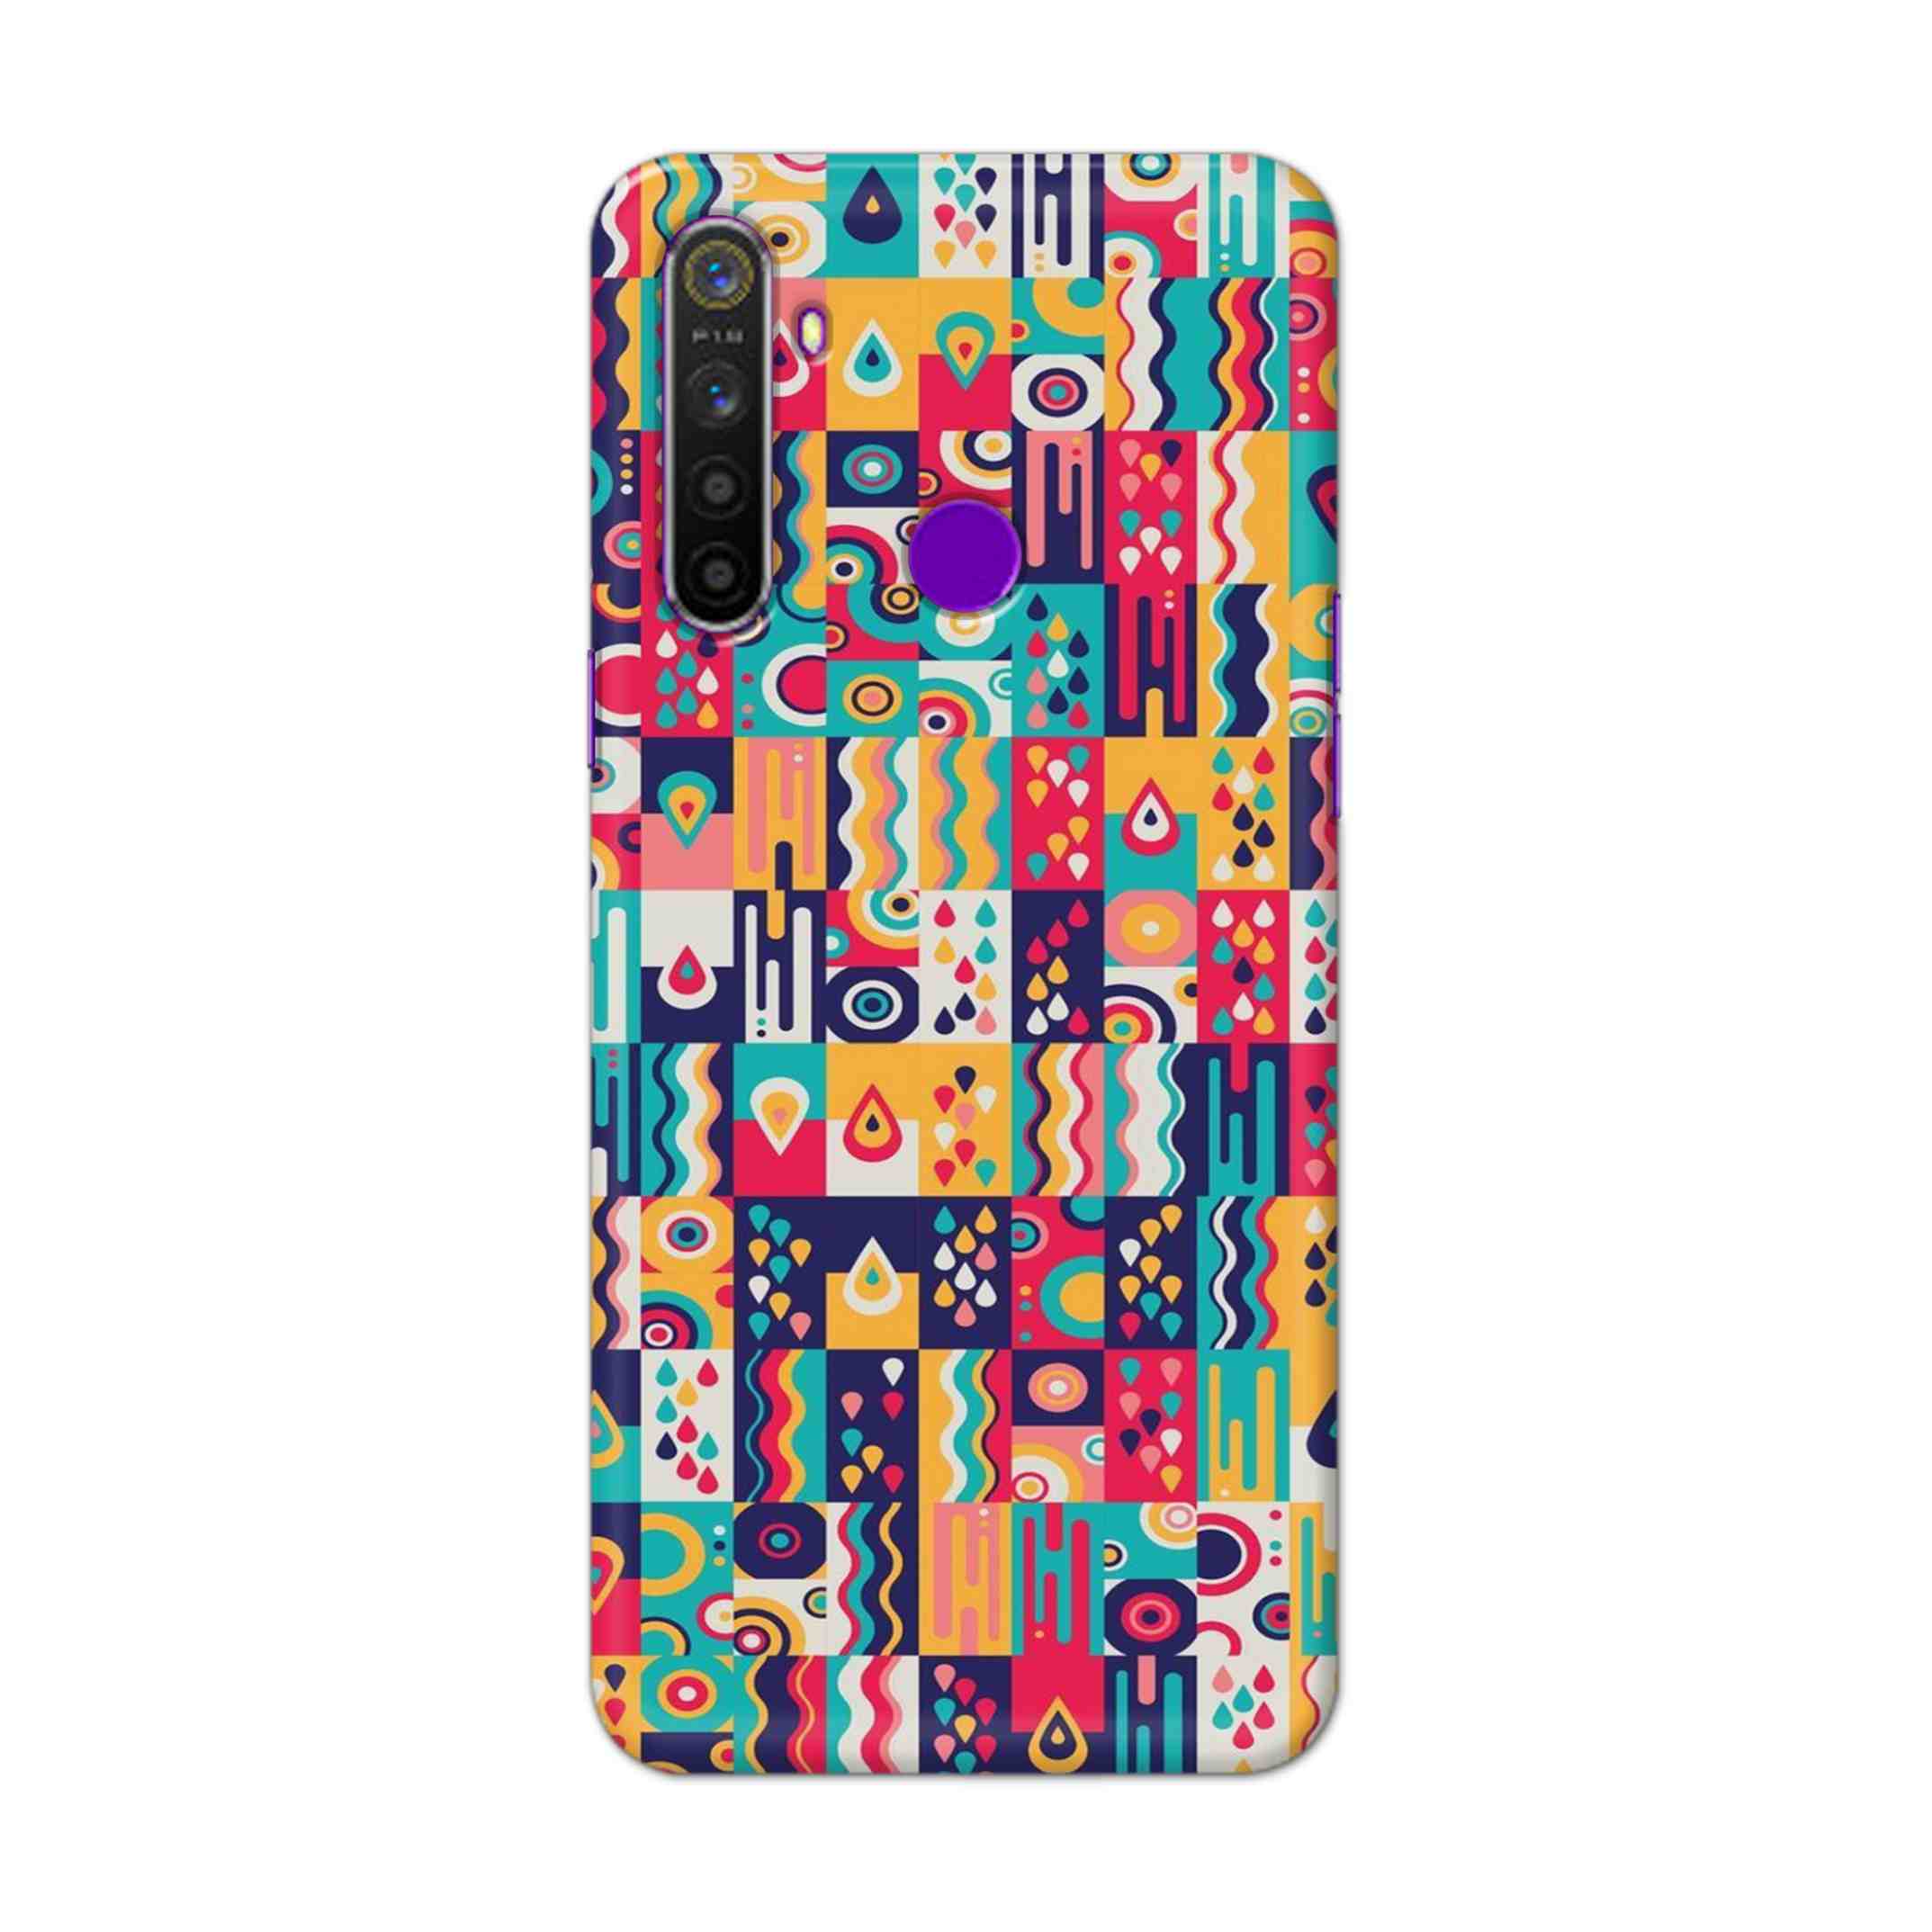 Buy Art Hard Back Mobile Phone Case Cover For Realme 5 Online